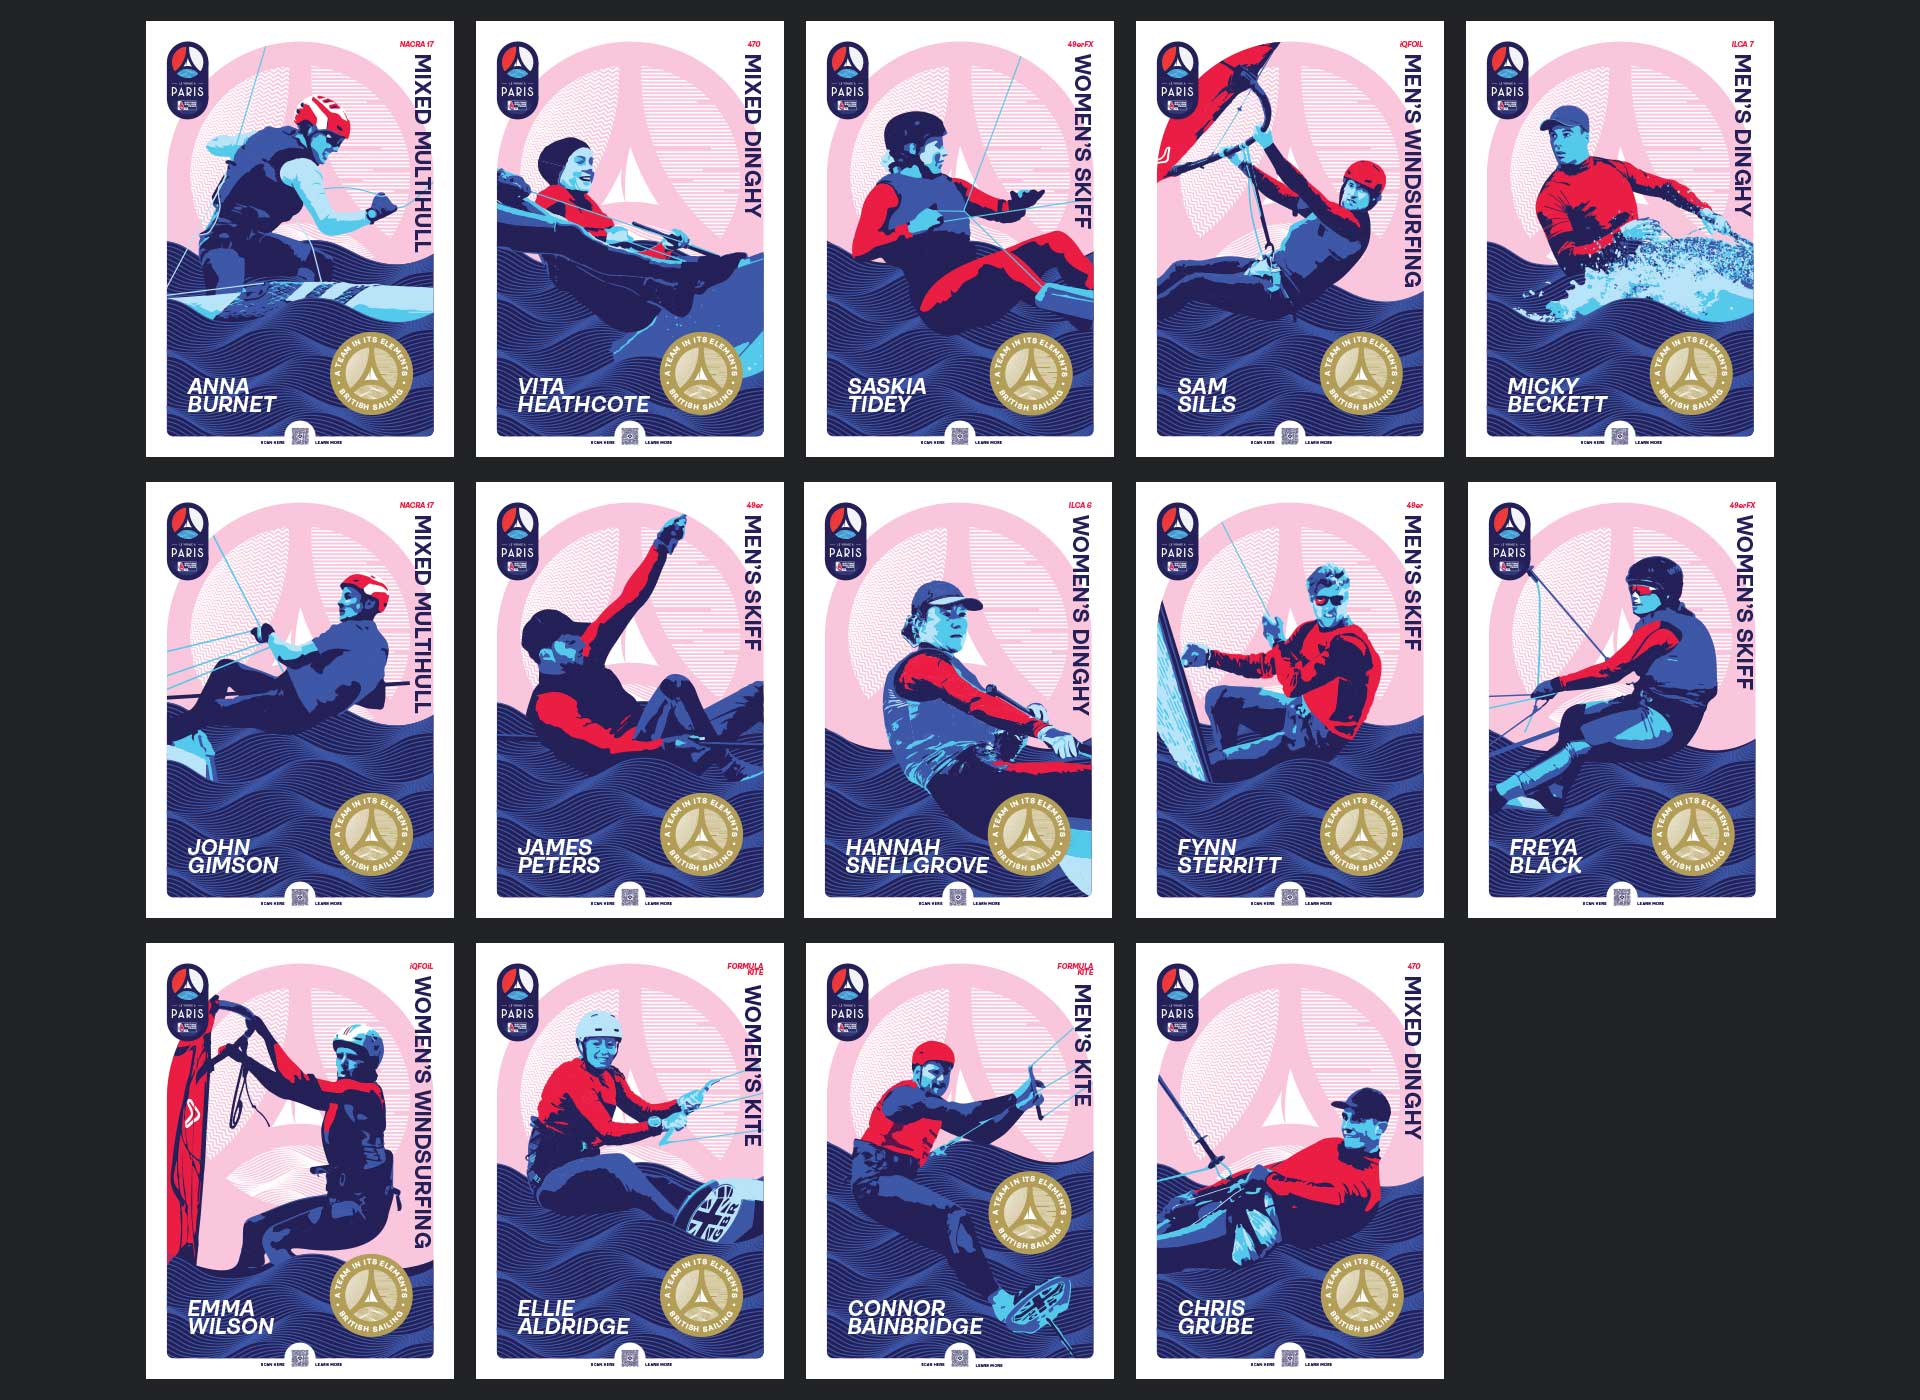 The British Sailing Team Olympics campaign individual sailor posters